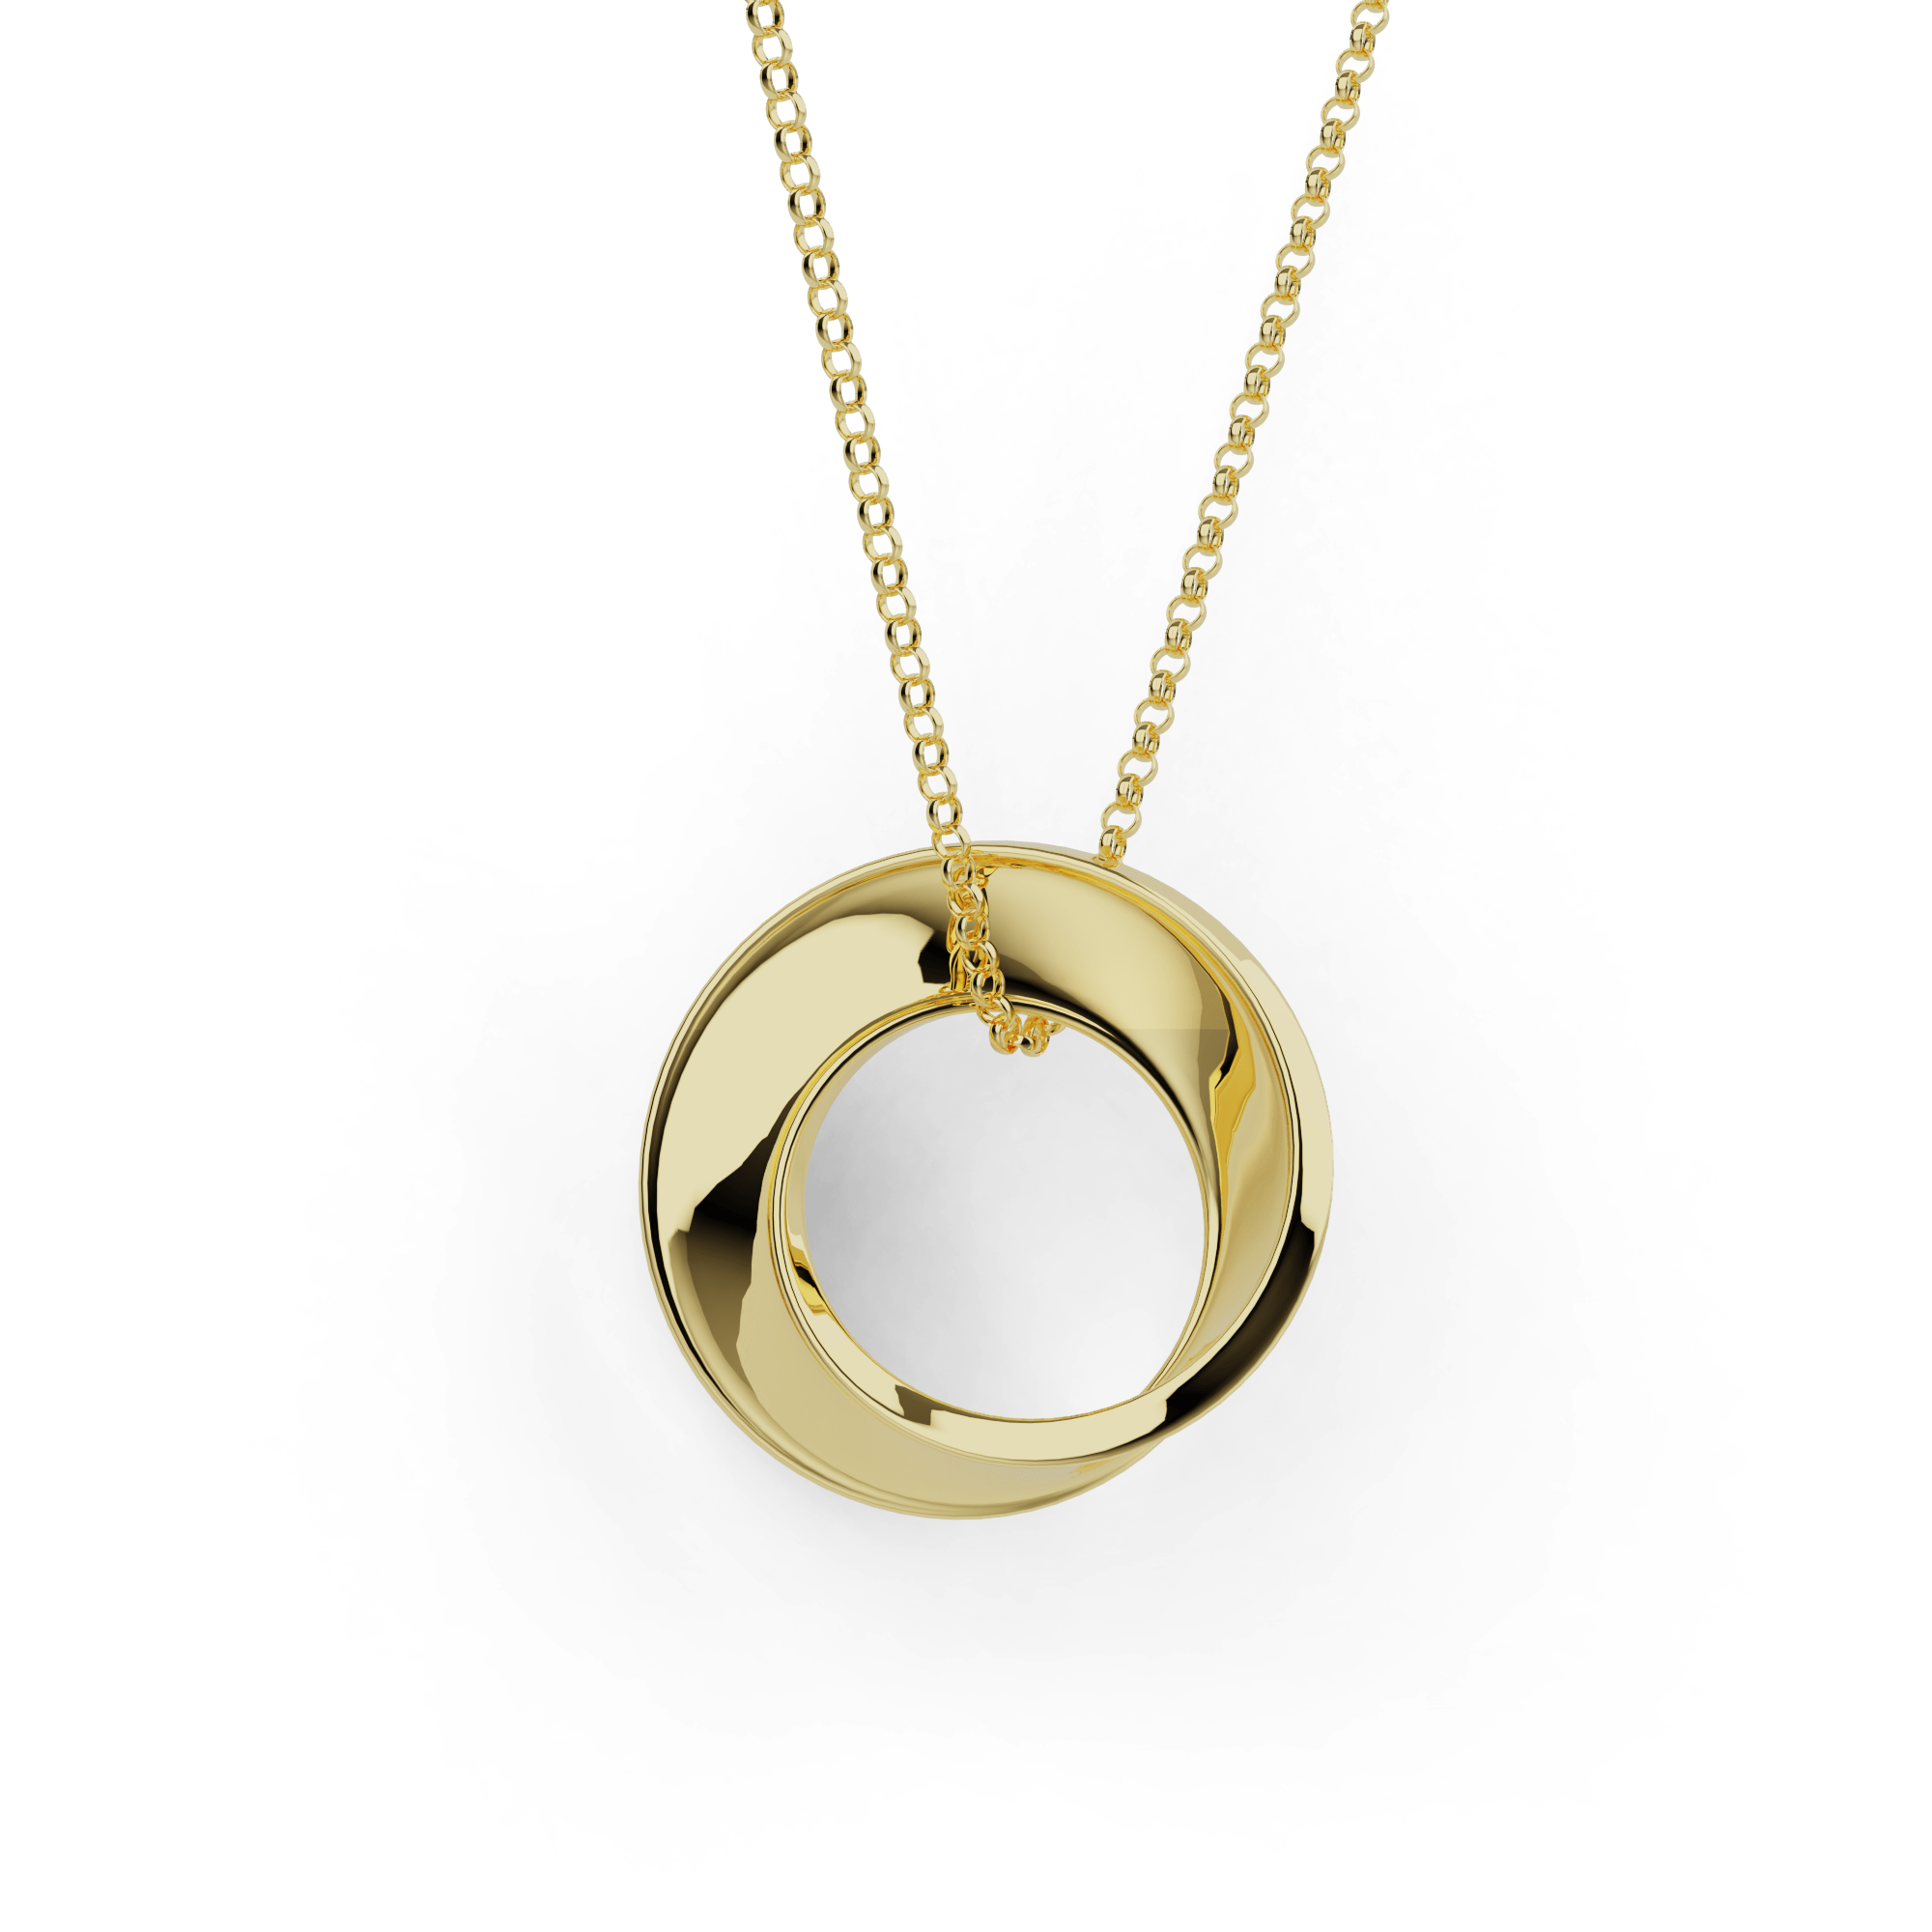 Mobius strip necklace | gold vermeil